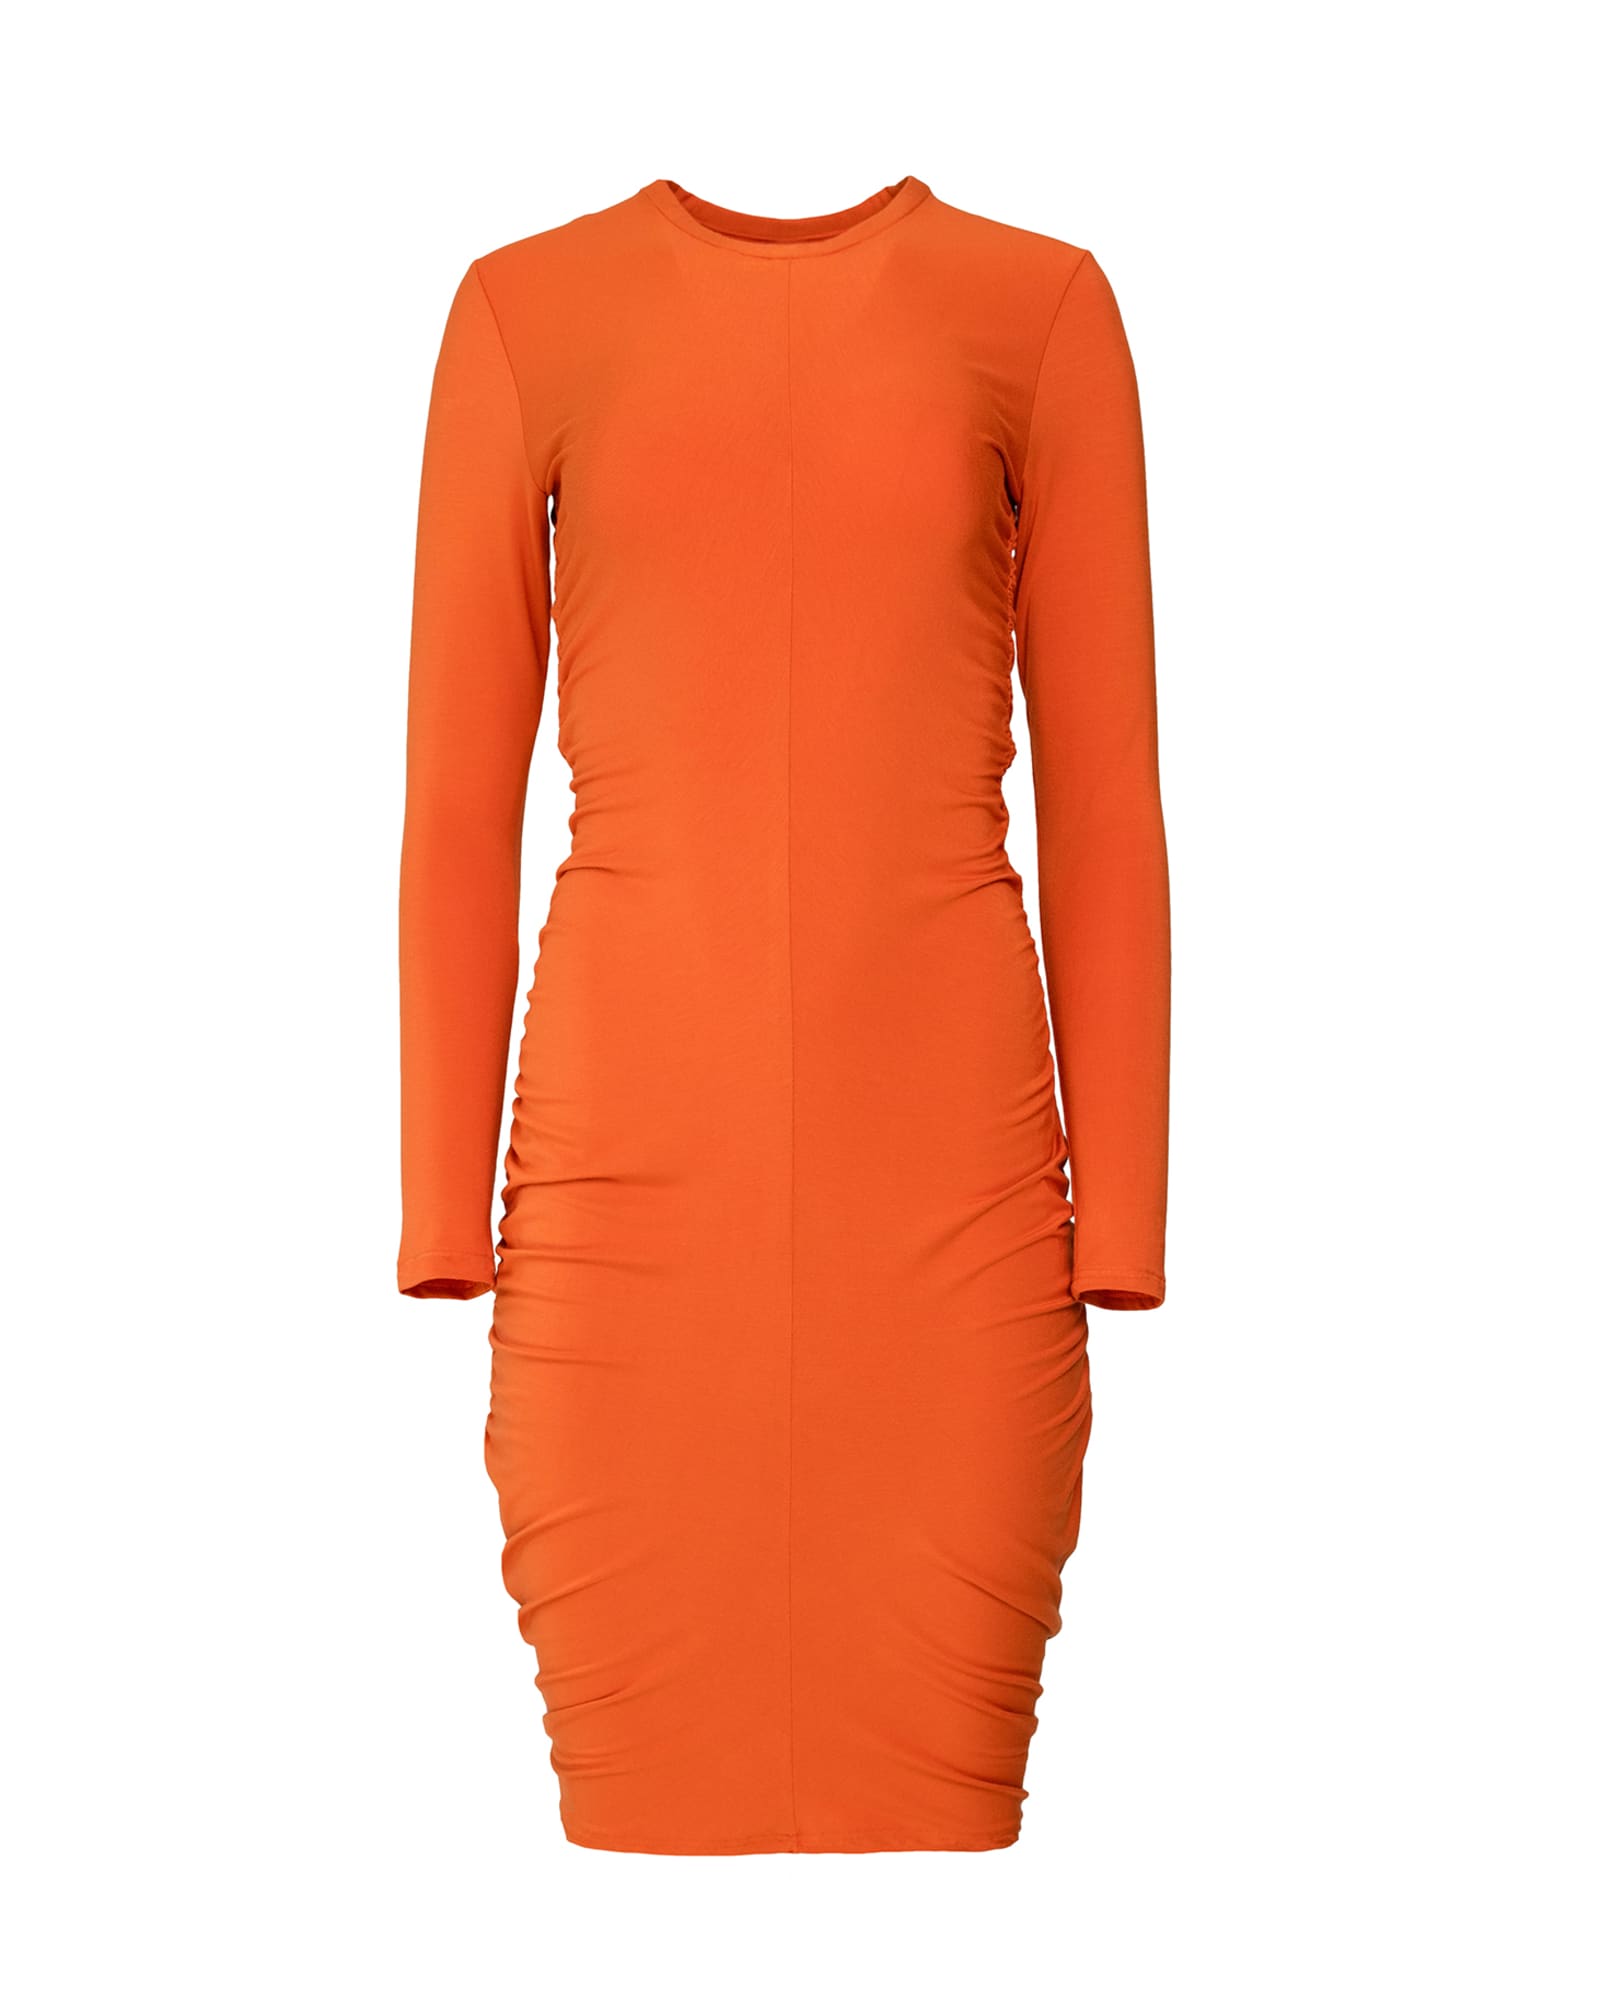 Plus Size Burnt Orange Dress